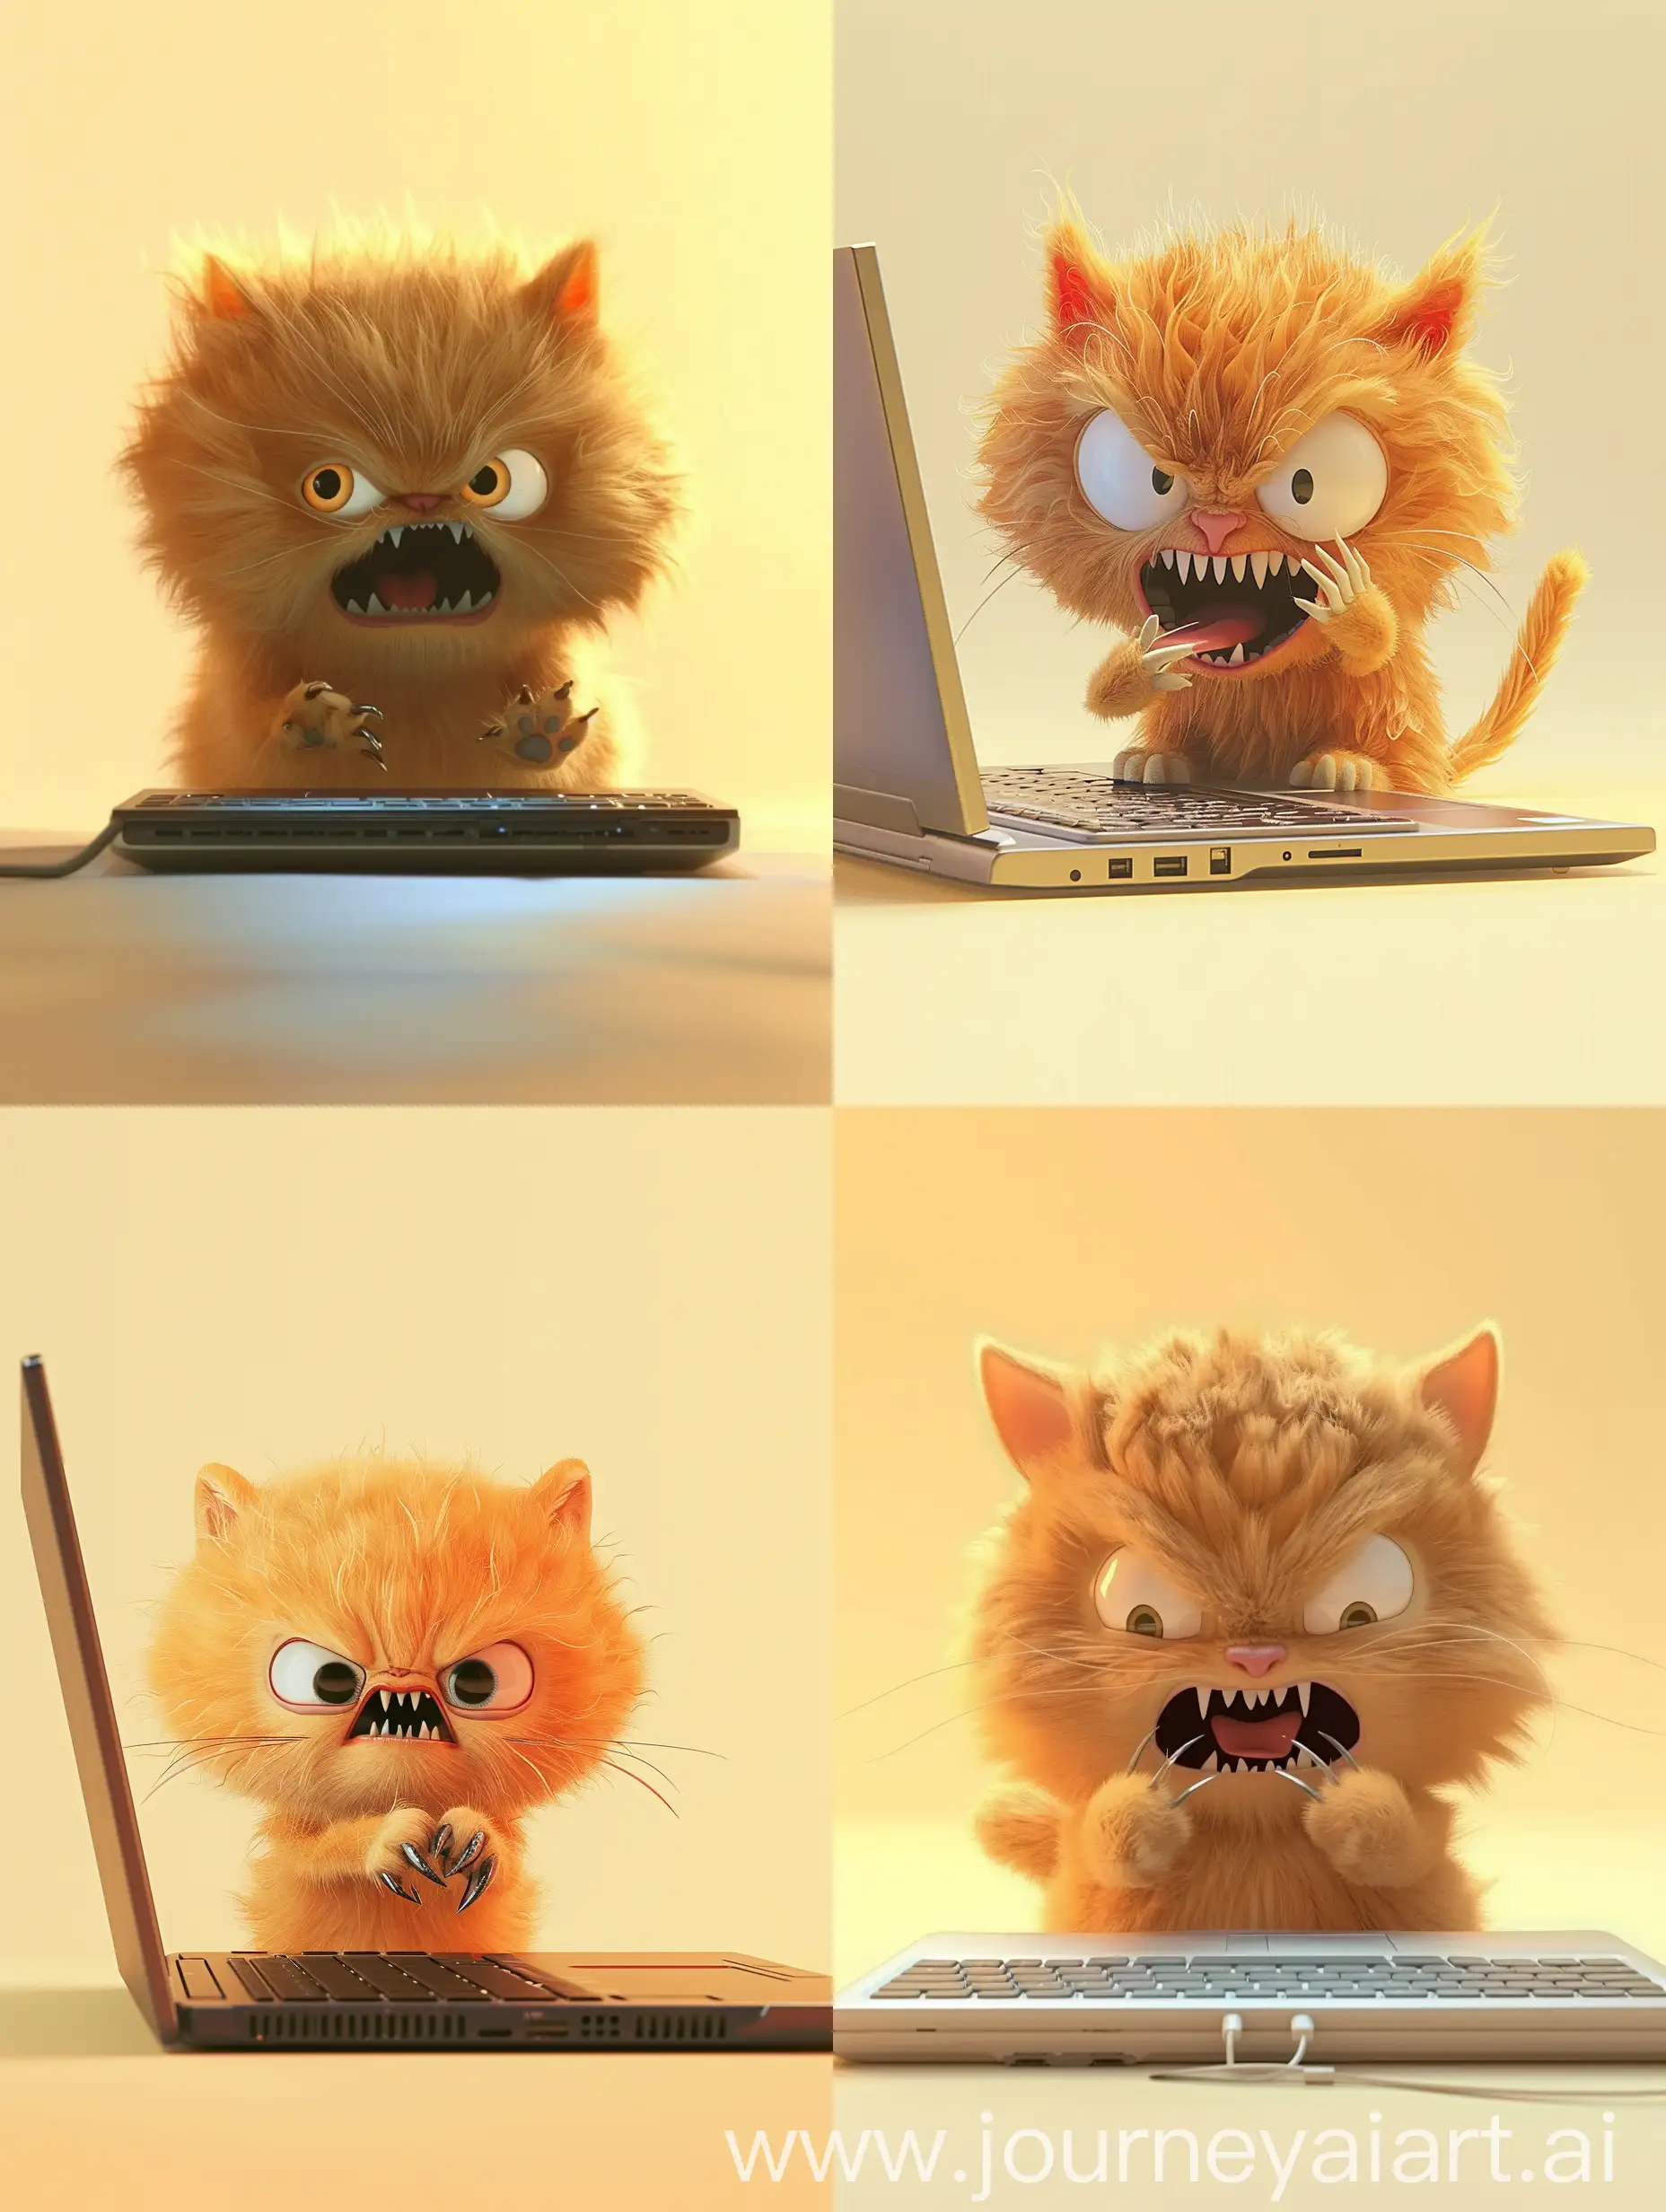 Adorable-Orange-Cat-Typing-on-Laptop-with-Big-Eyes-Pixar-Style